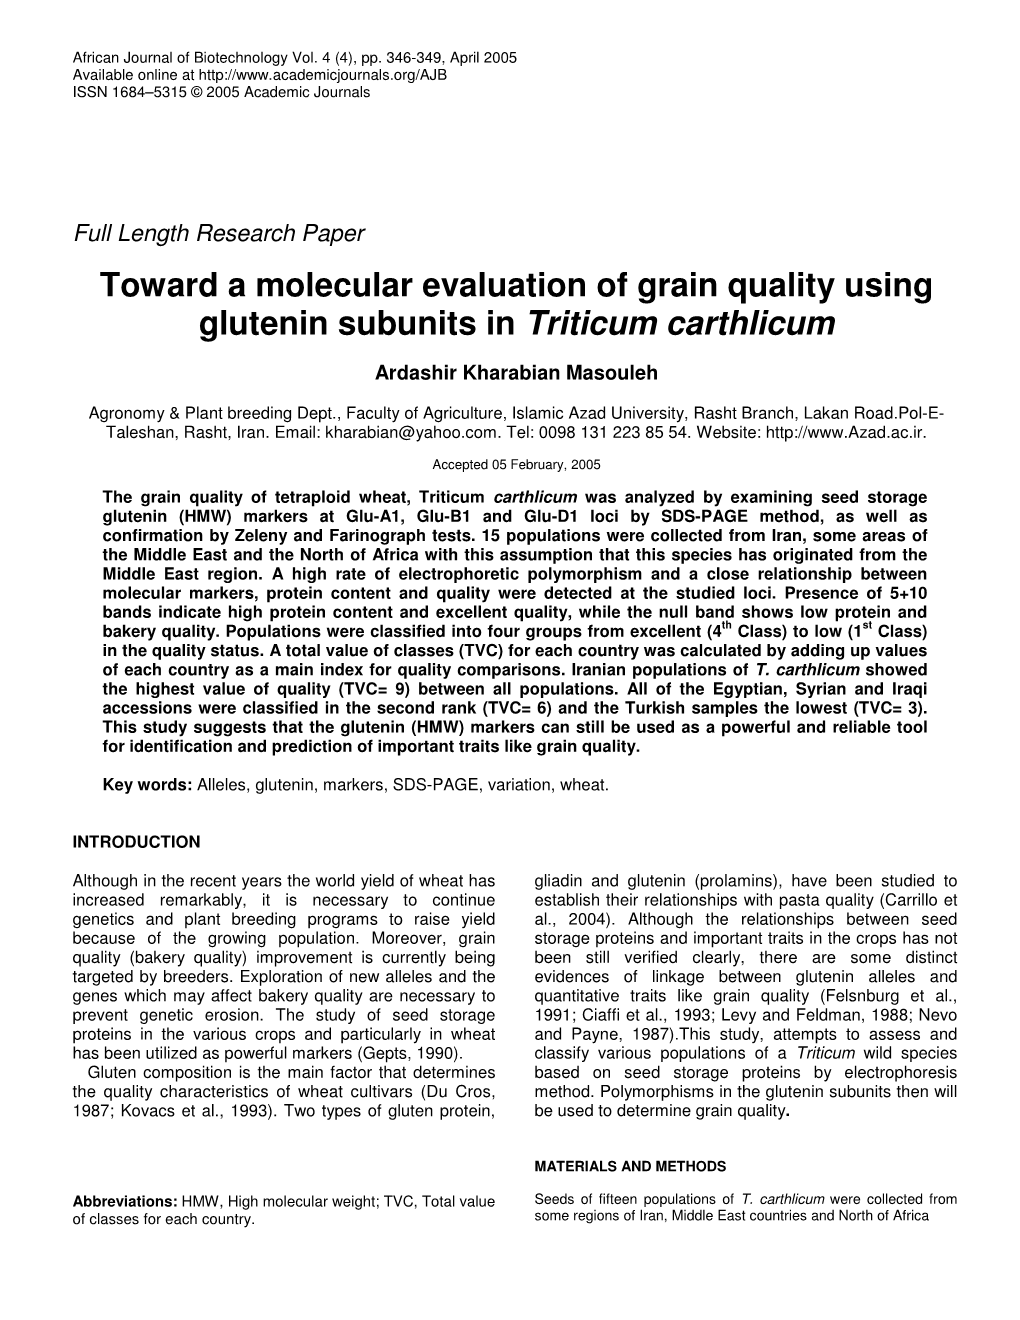 Toward a Molecular Evaluation of Grain Quality Using Glutenin Subunits in Triticum Carthlicum